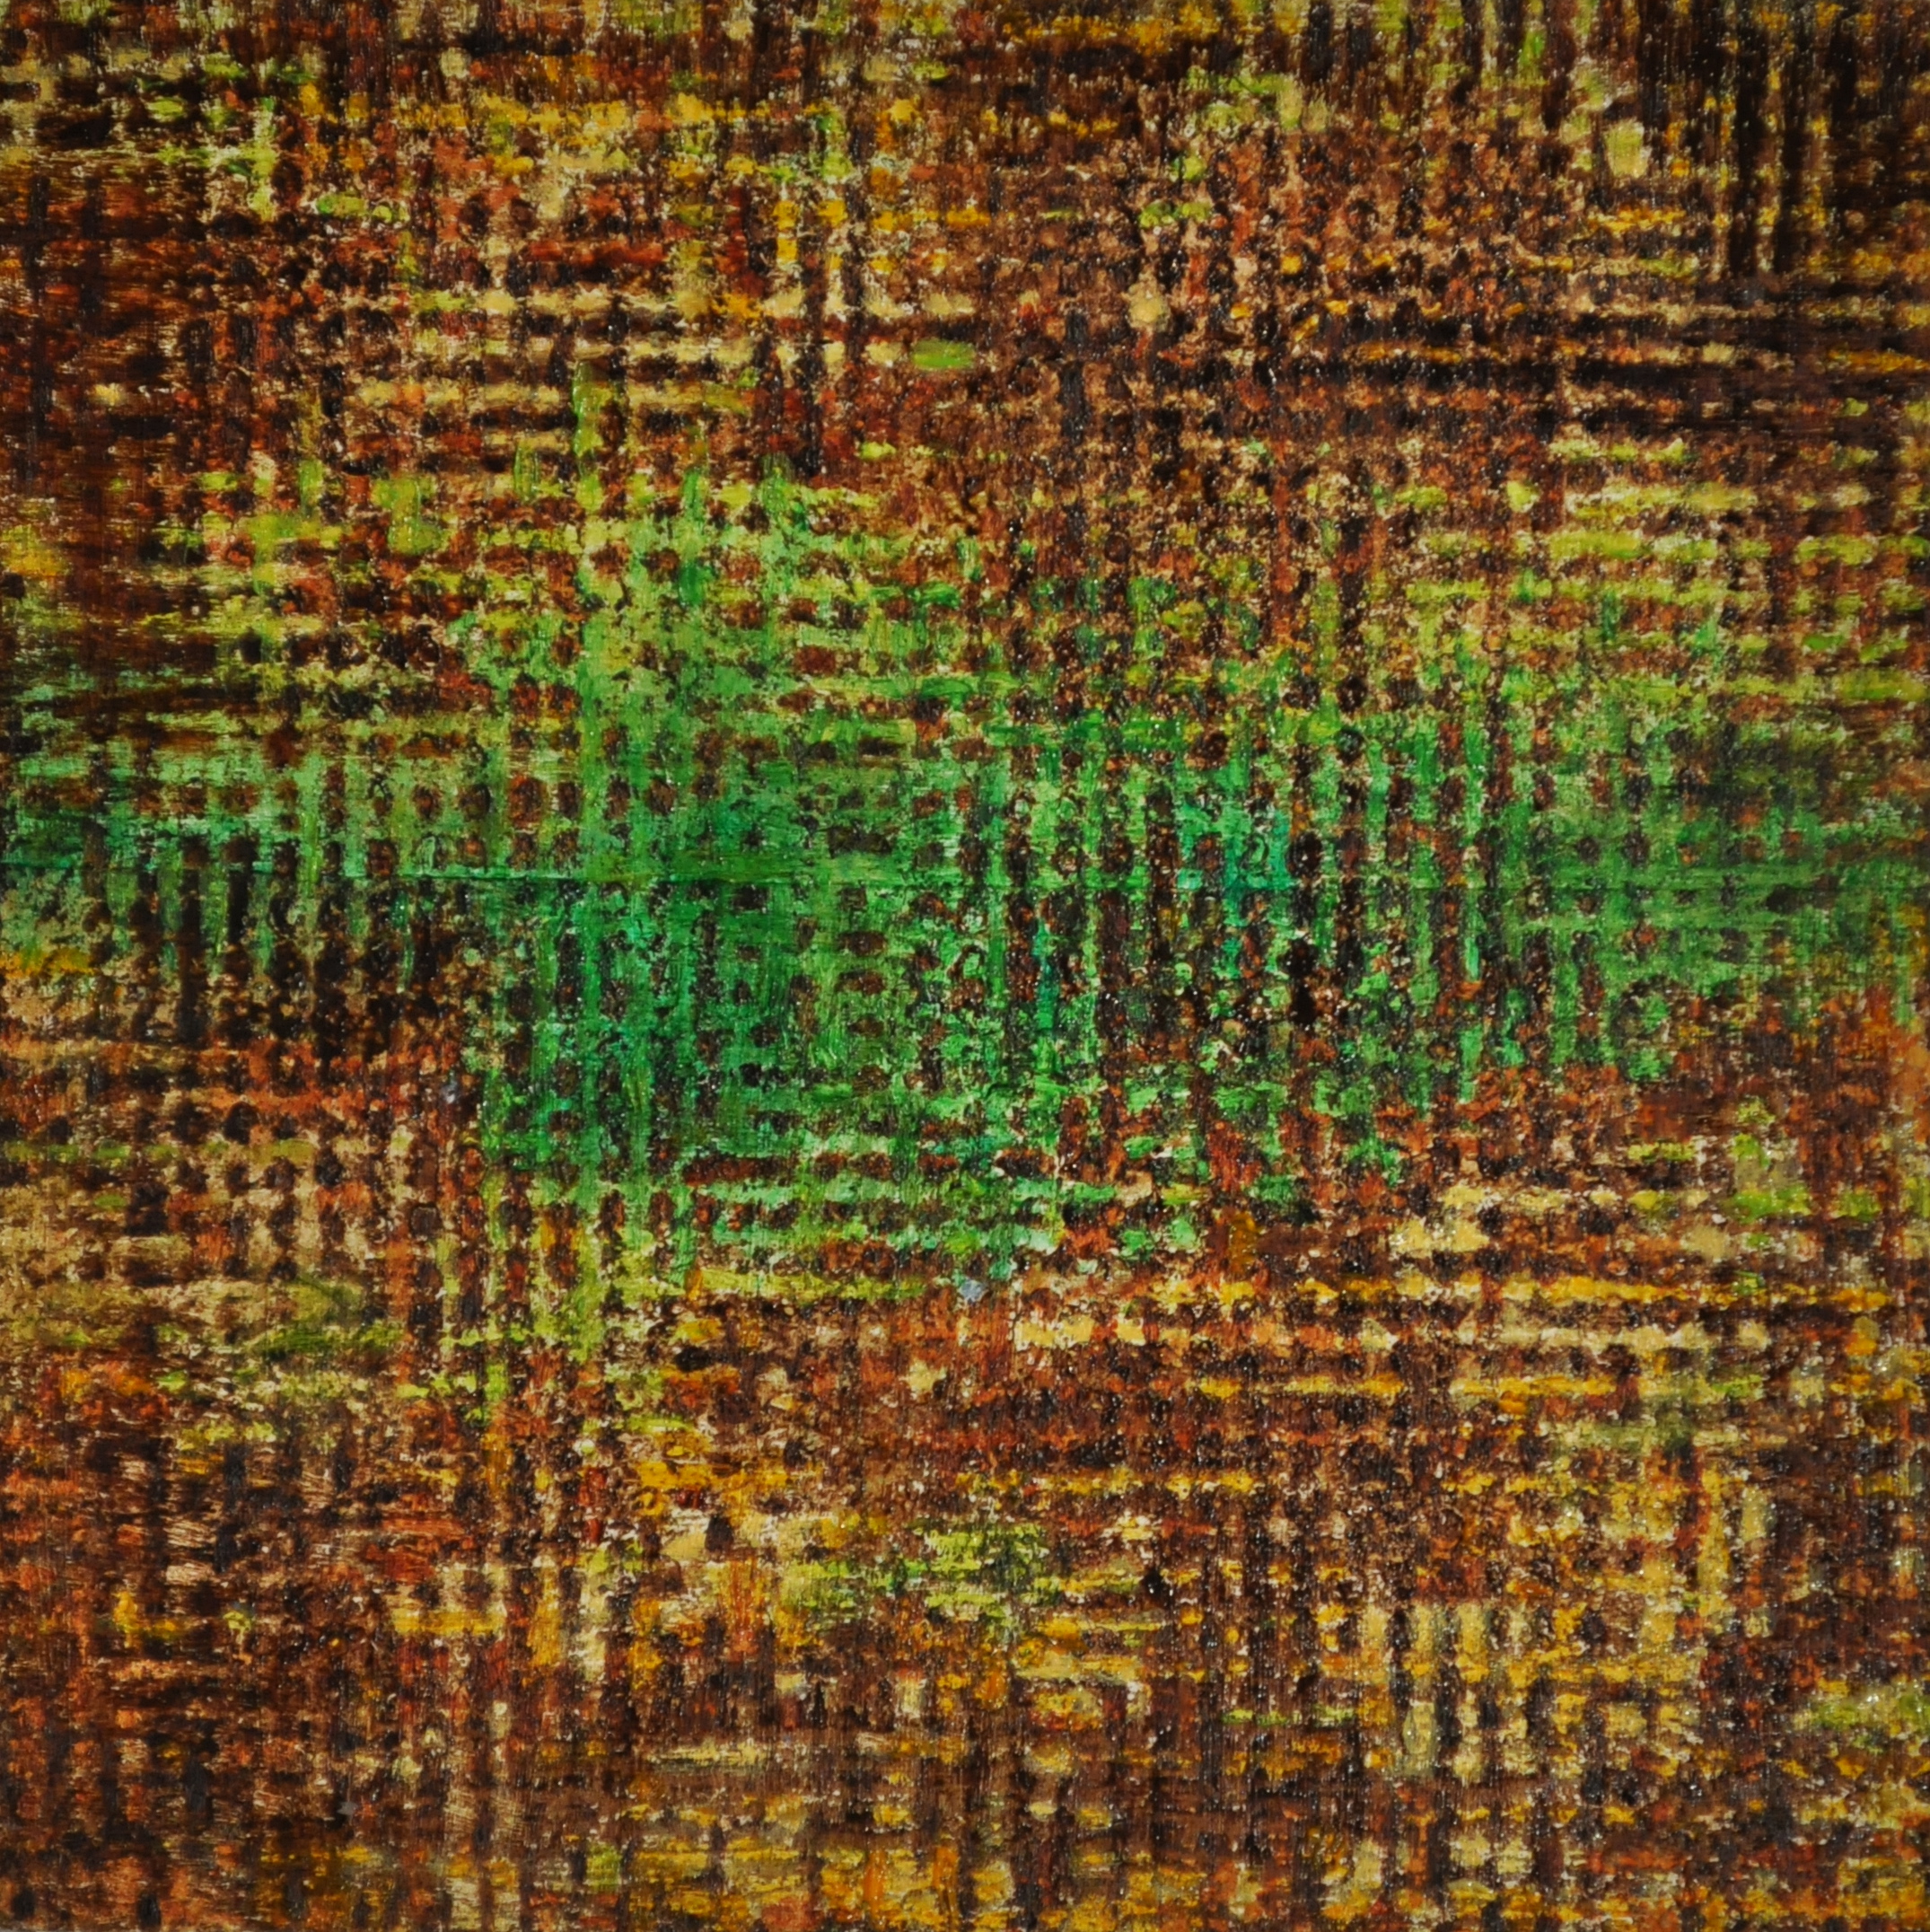  extant, 2016 oil on wood panel, 15 x 15 cm 